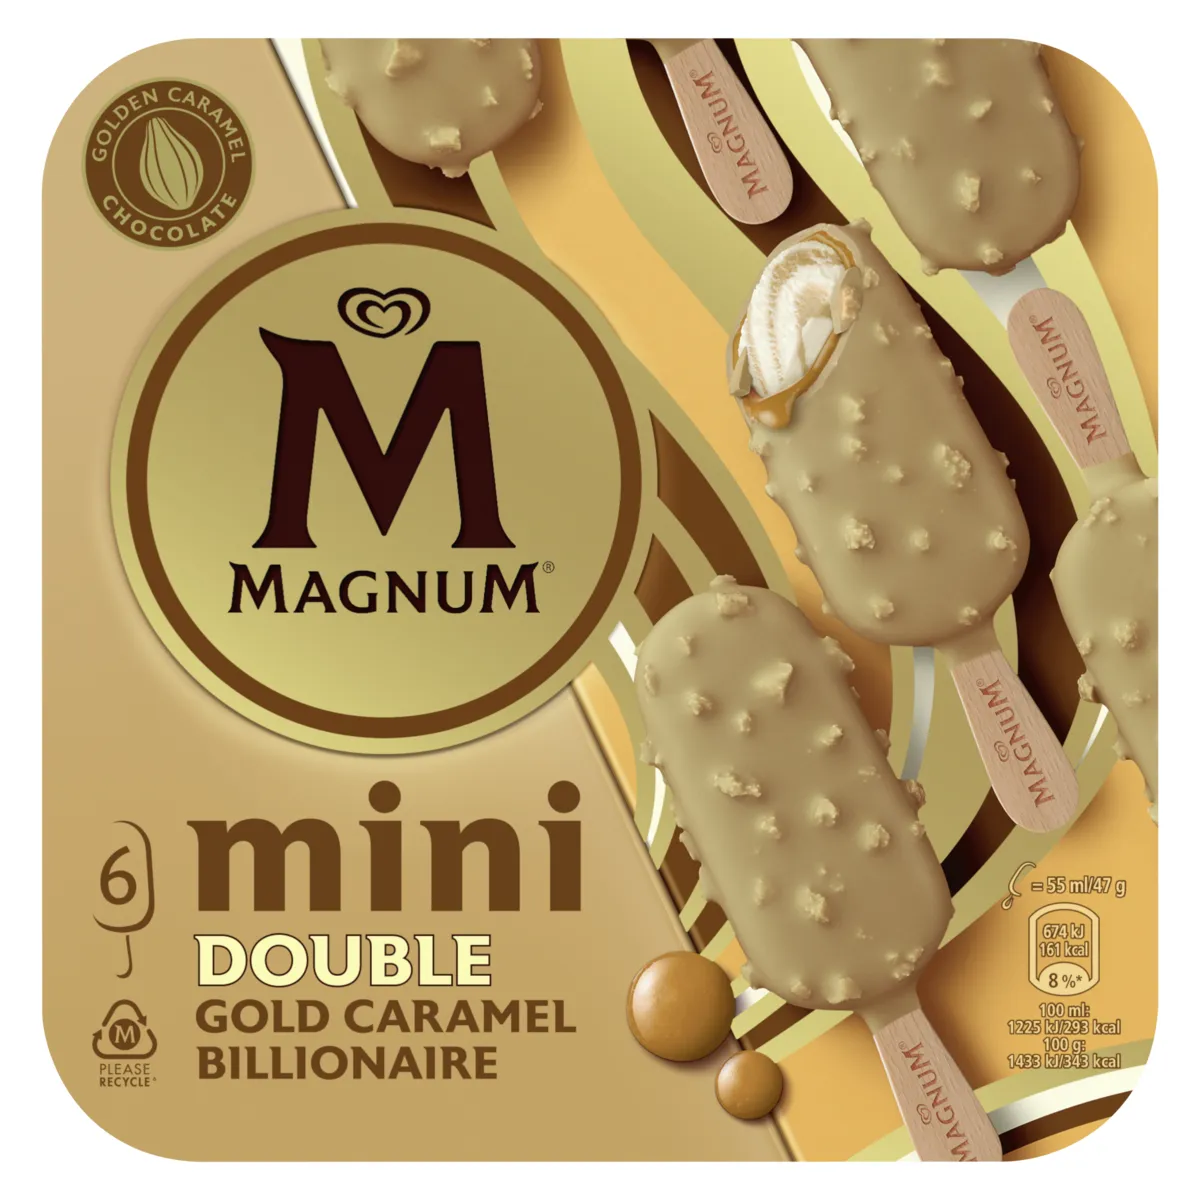 bâtonnets magnum mini caramel almond gold caramel billionaire